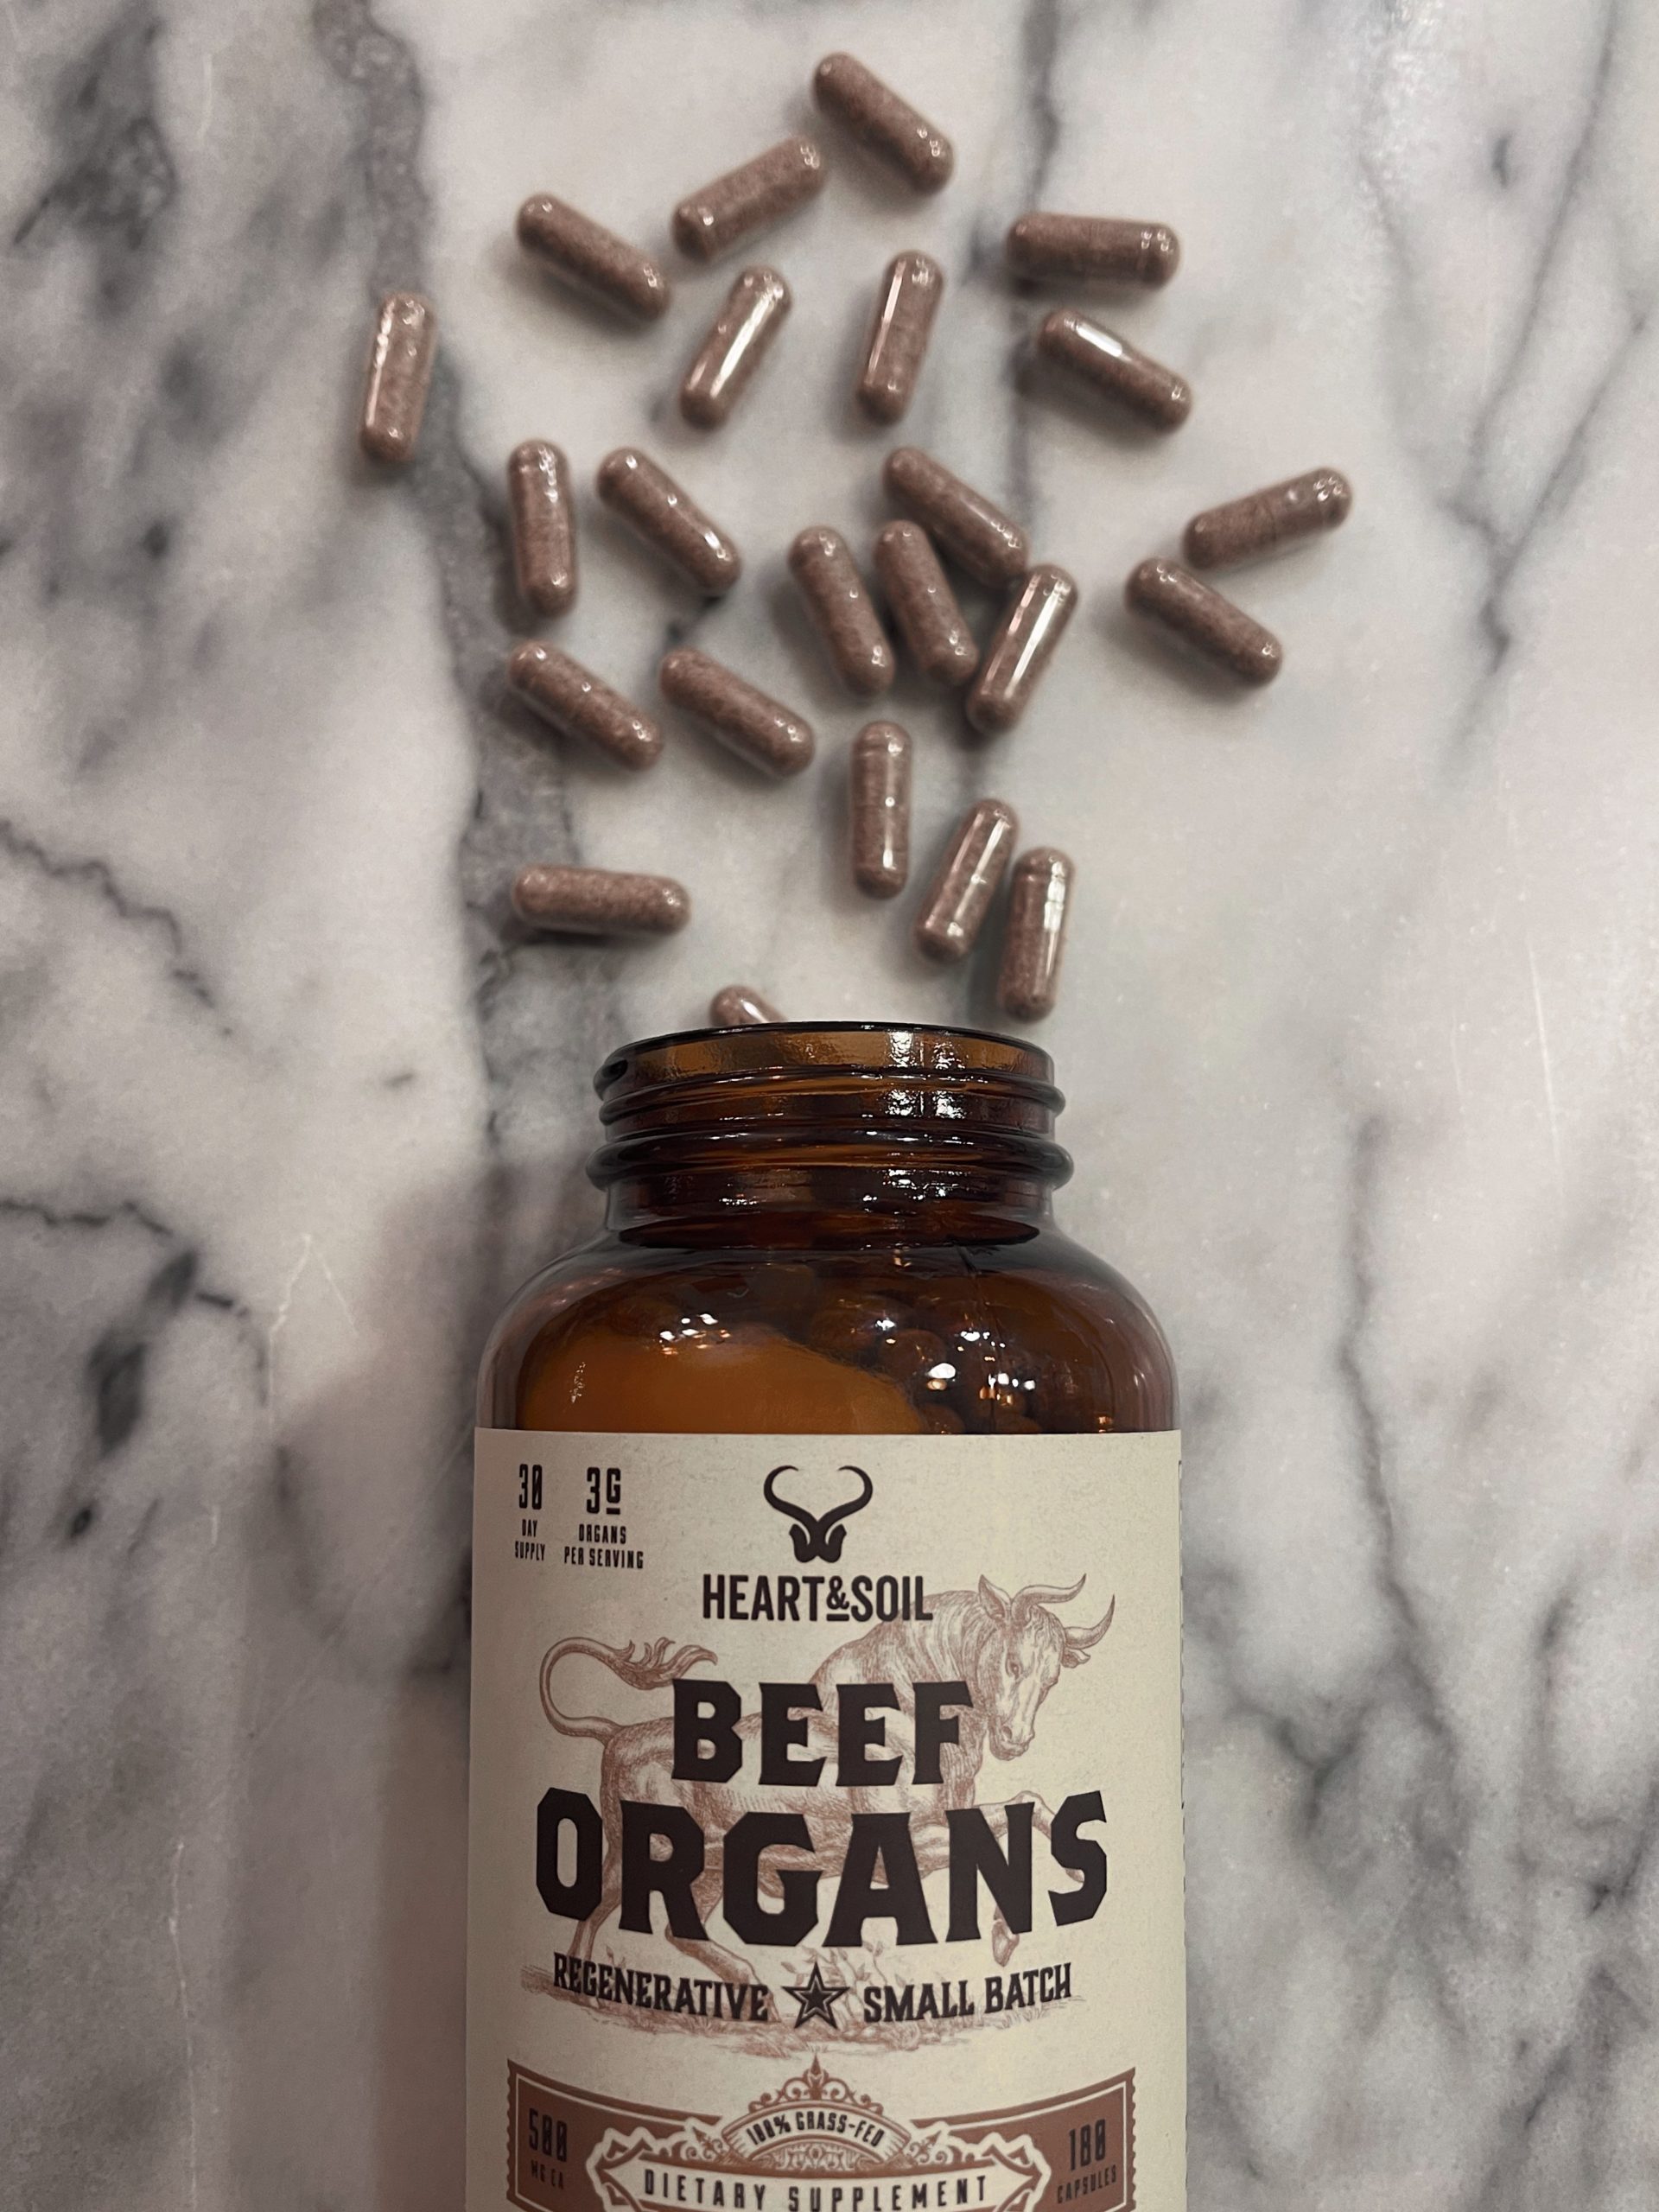 Beef Organ Supplement Benefits | The Hive